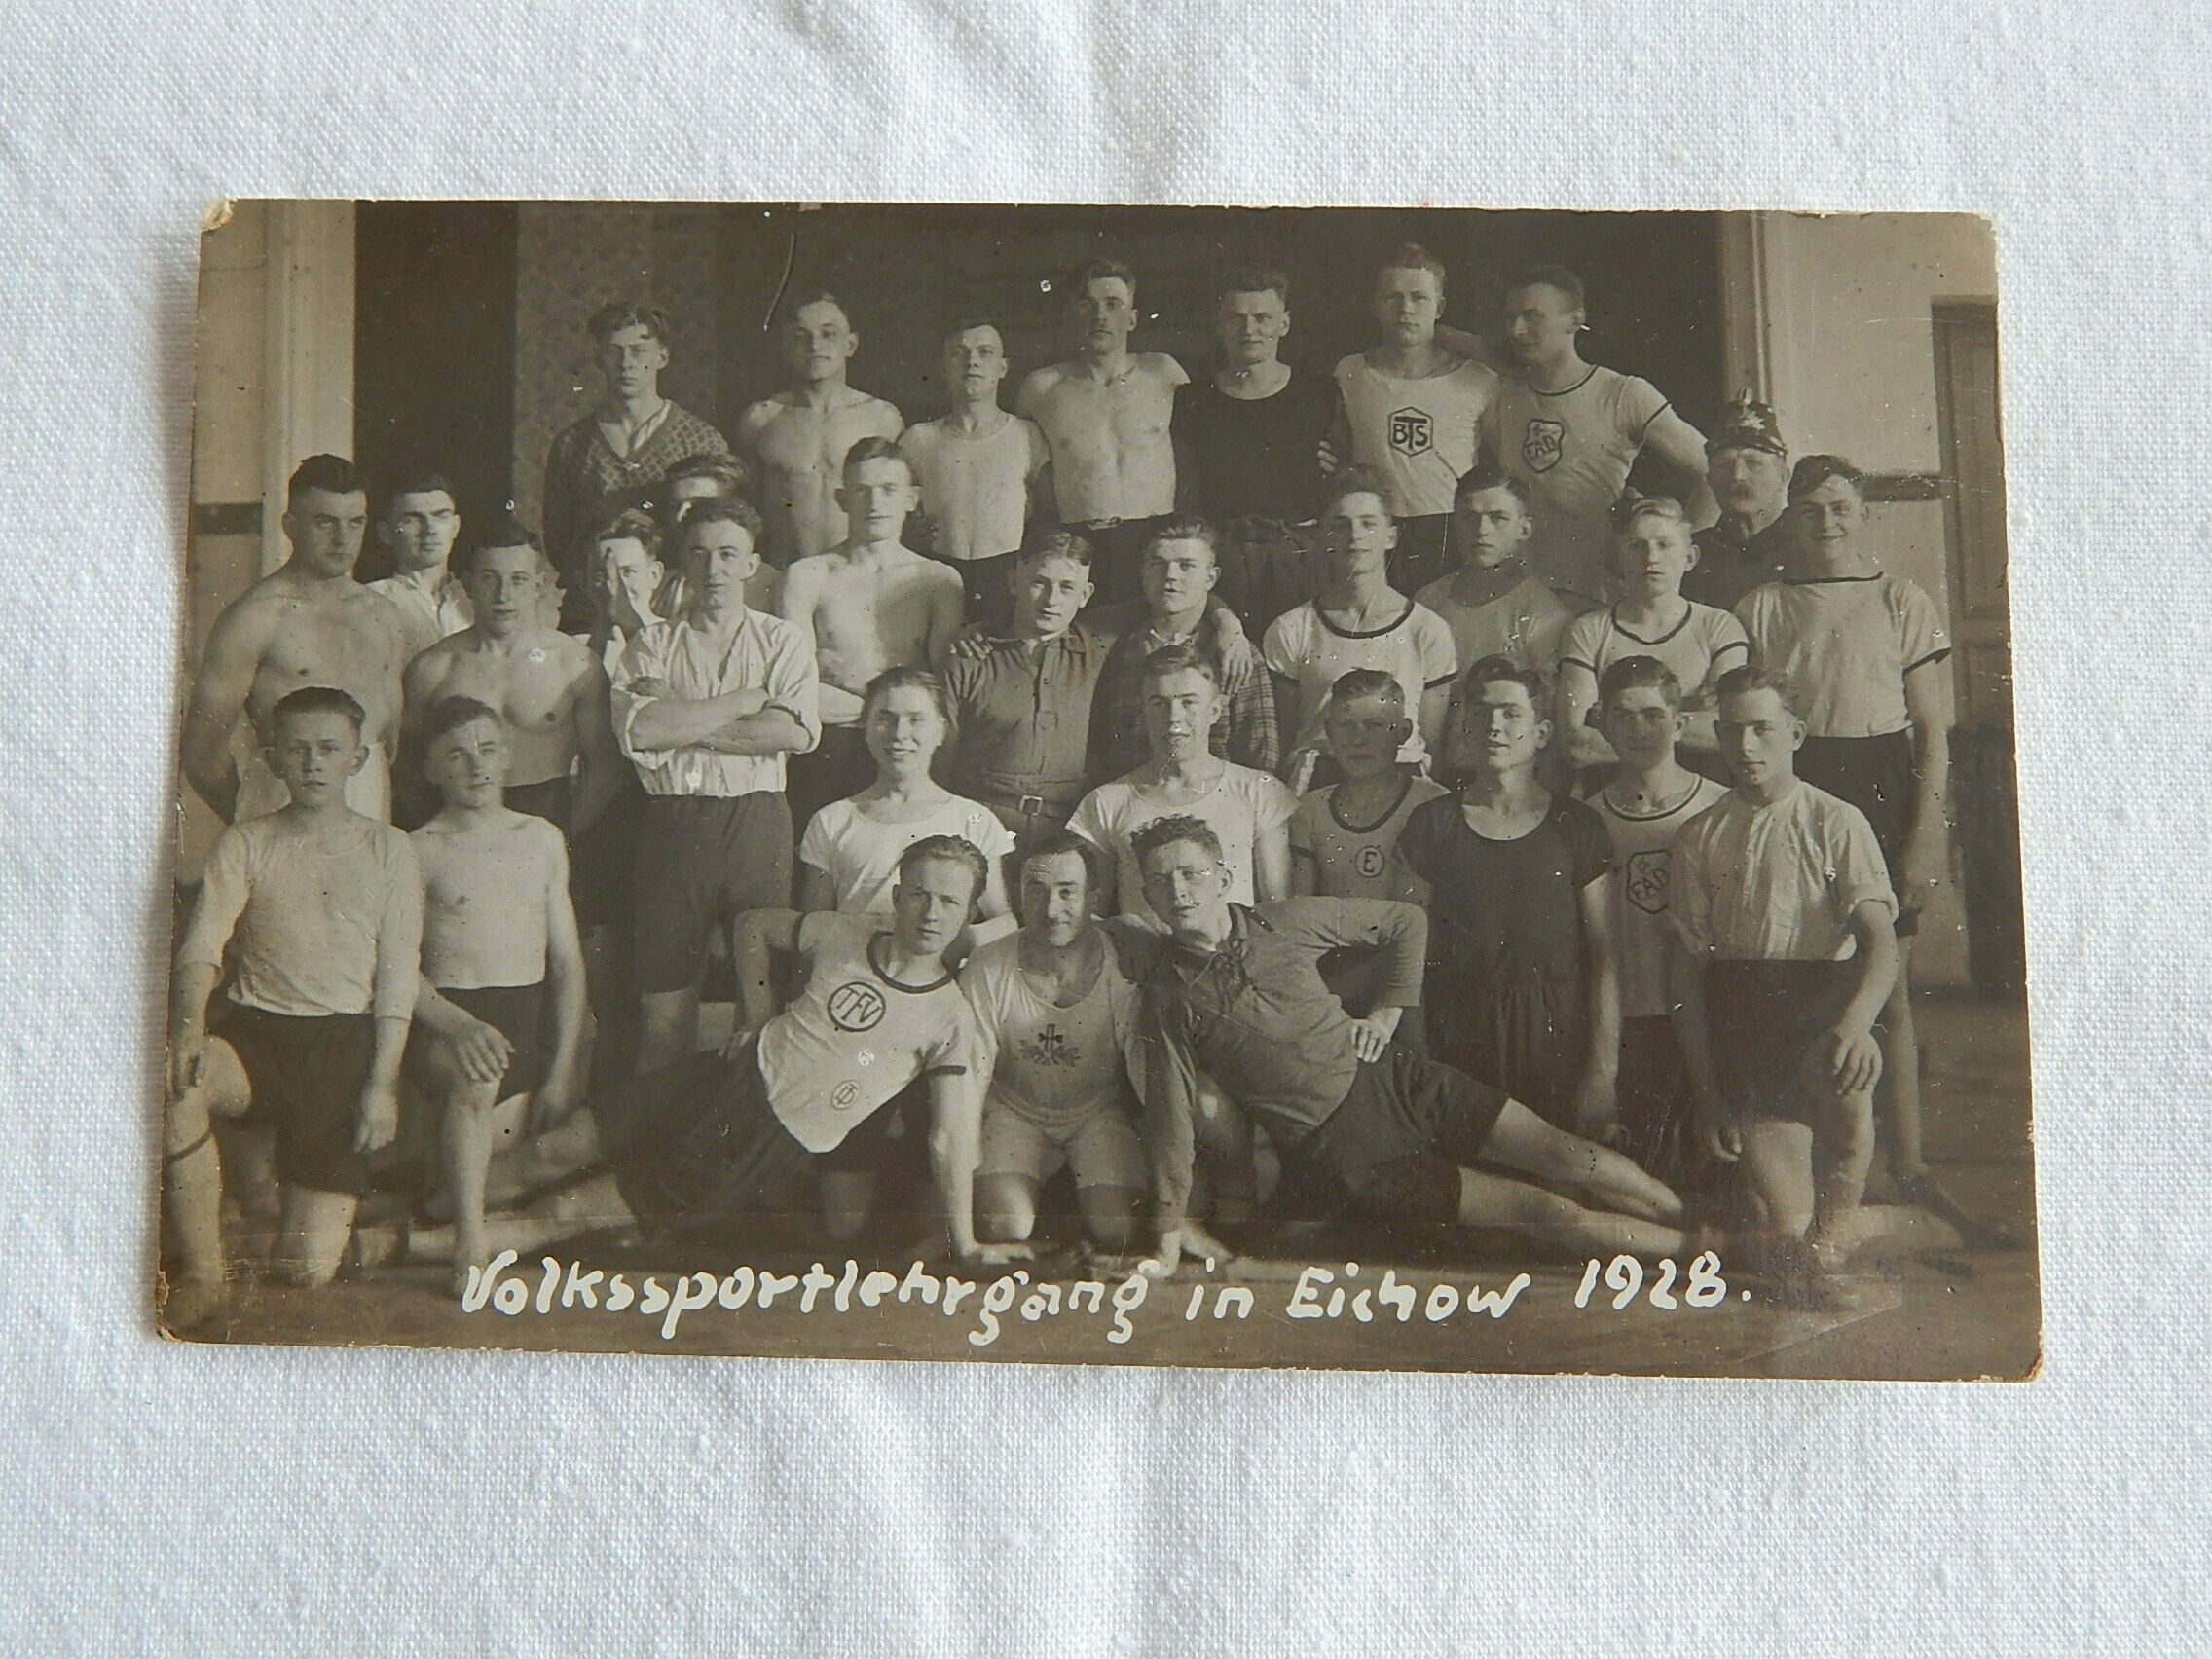 Fotografie " Volkssportlehrgang in Eichow 1928" (Heimatmuseum Dissen CC BY-NC-SA)